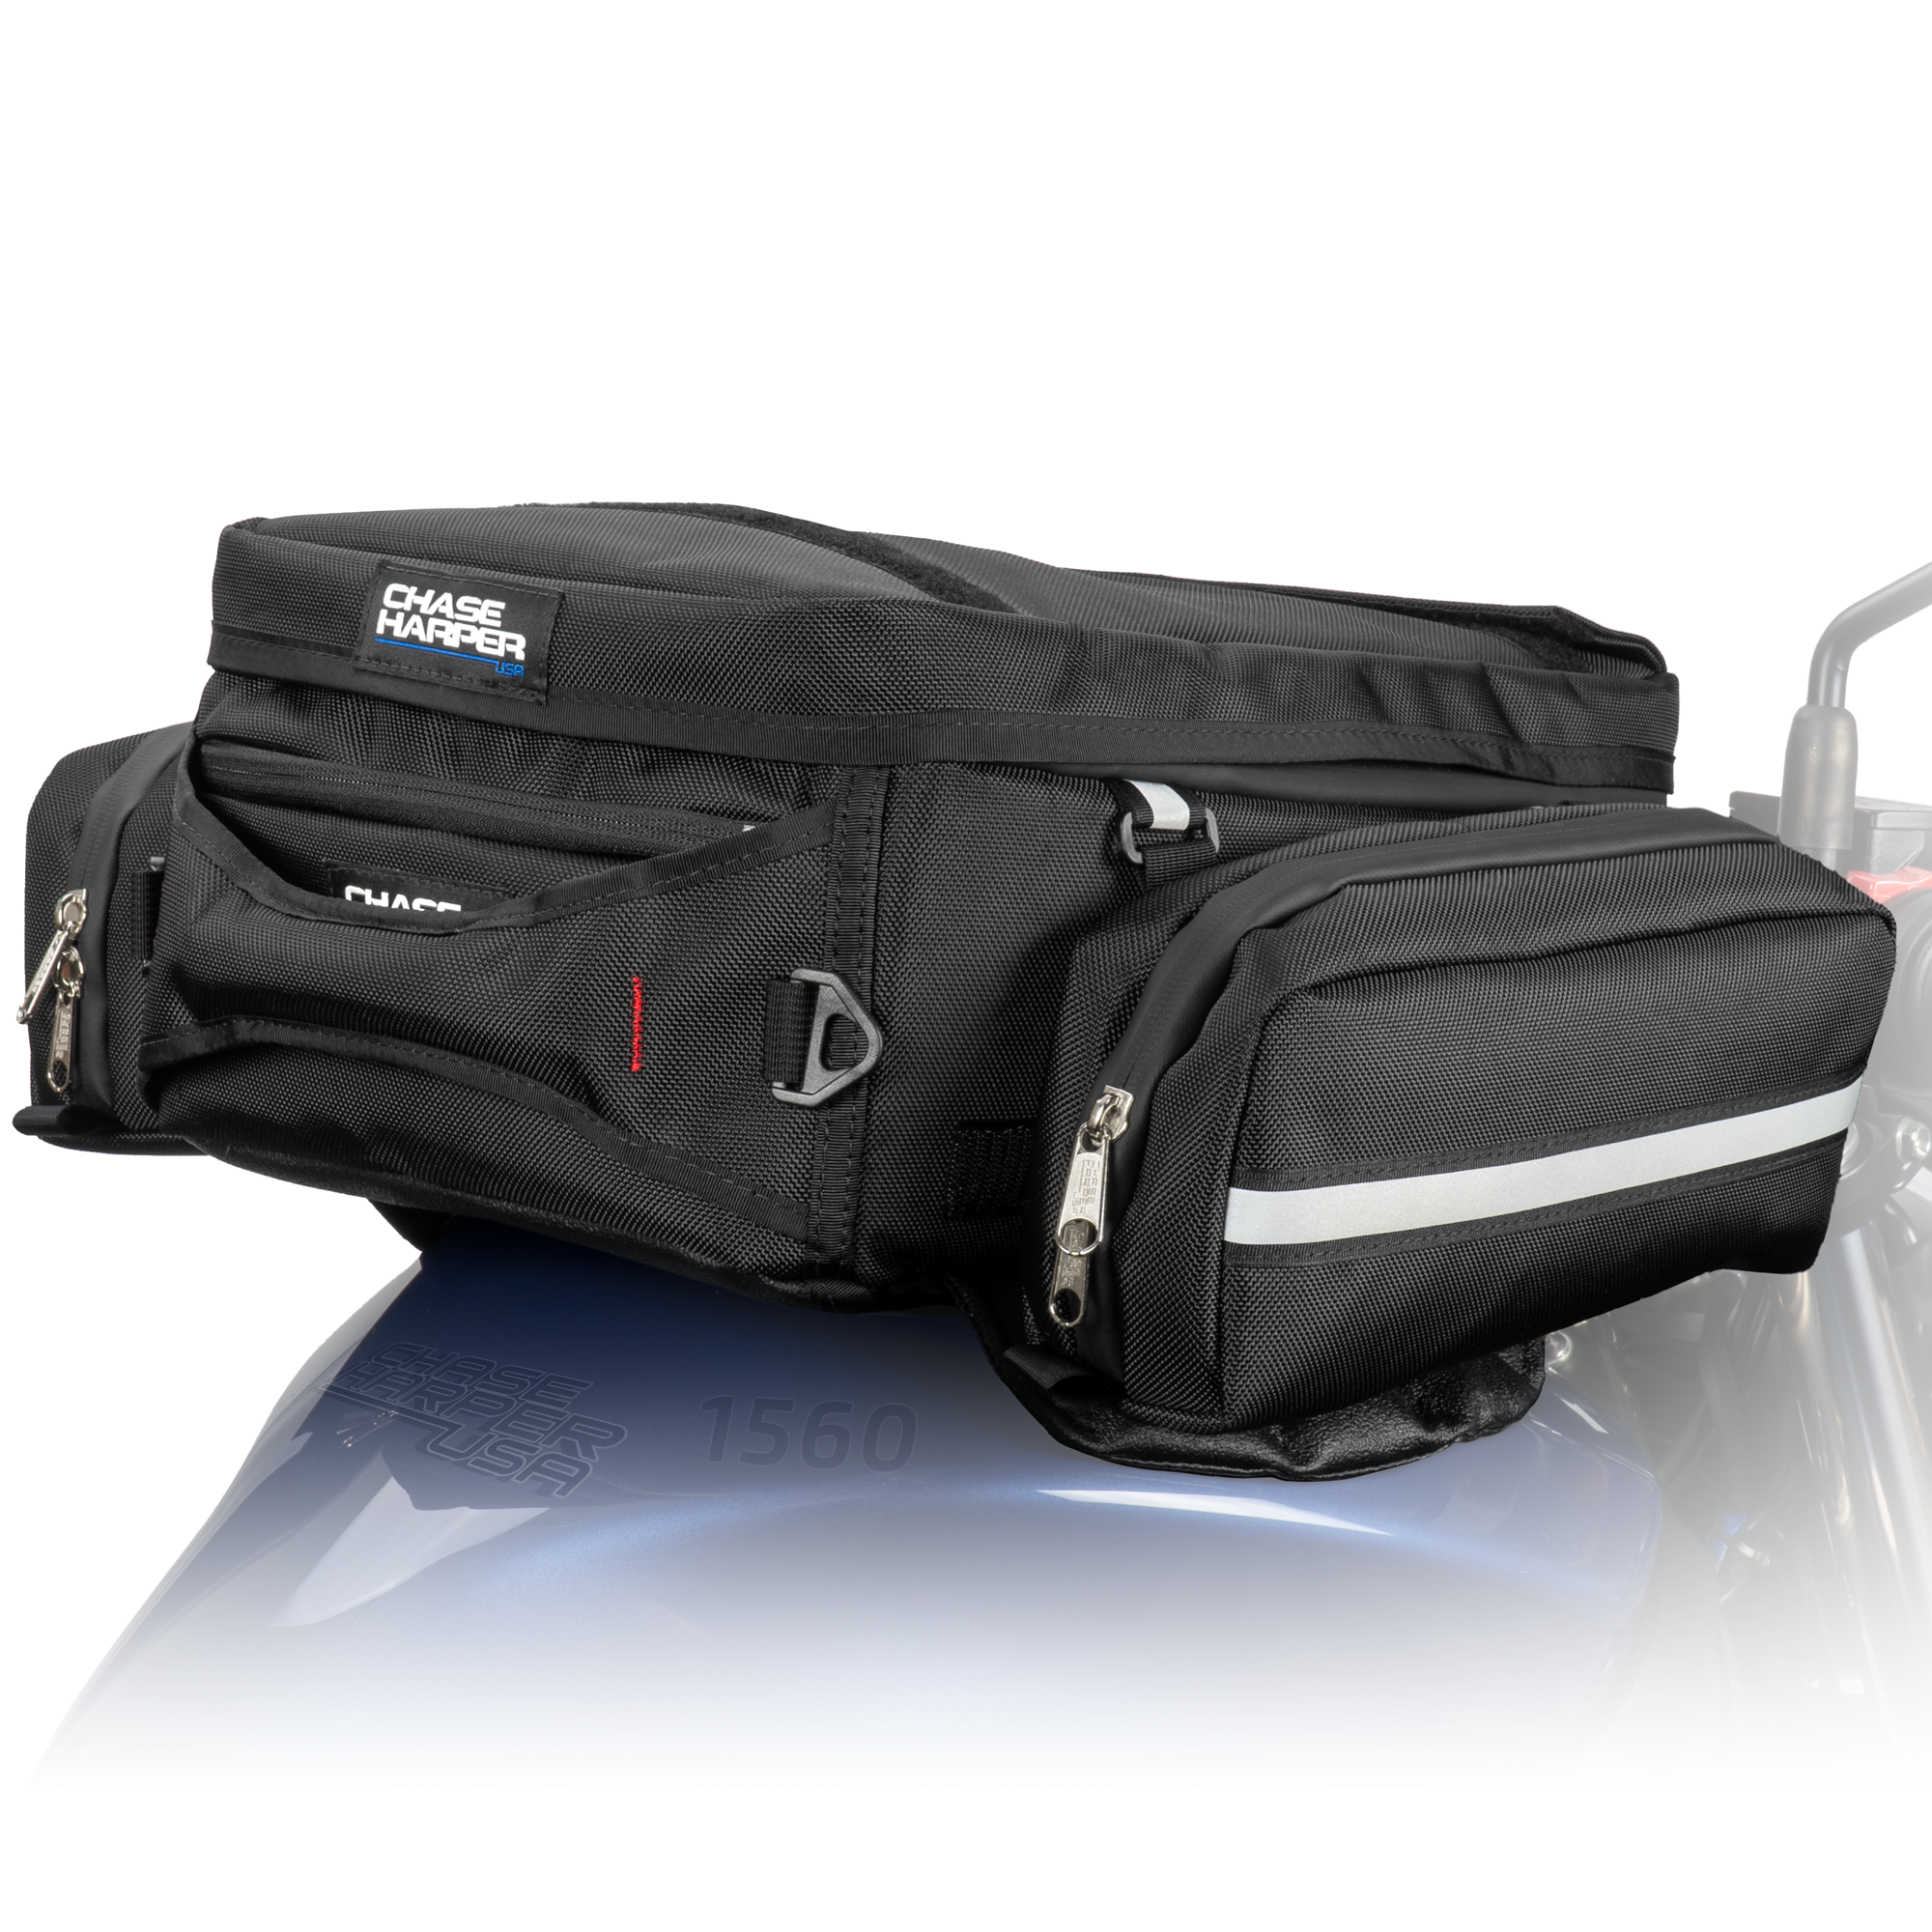 - Tank Harper Sport USA Tour 2020 Bag Model - Chase 1560